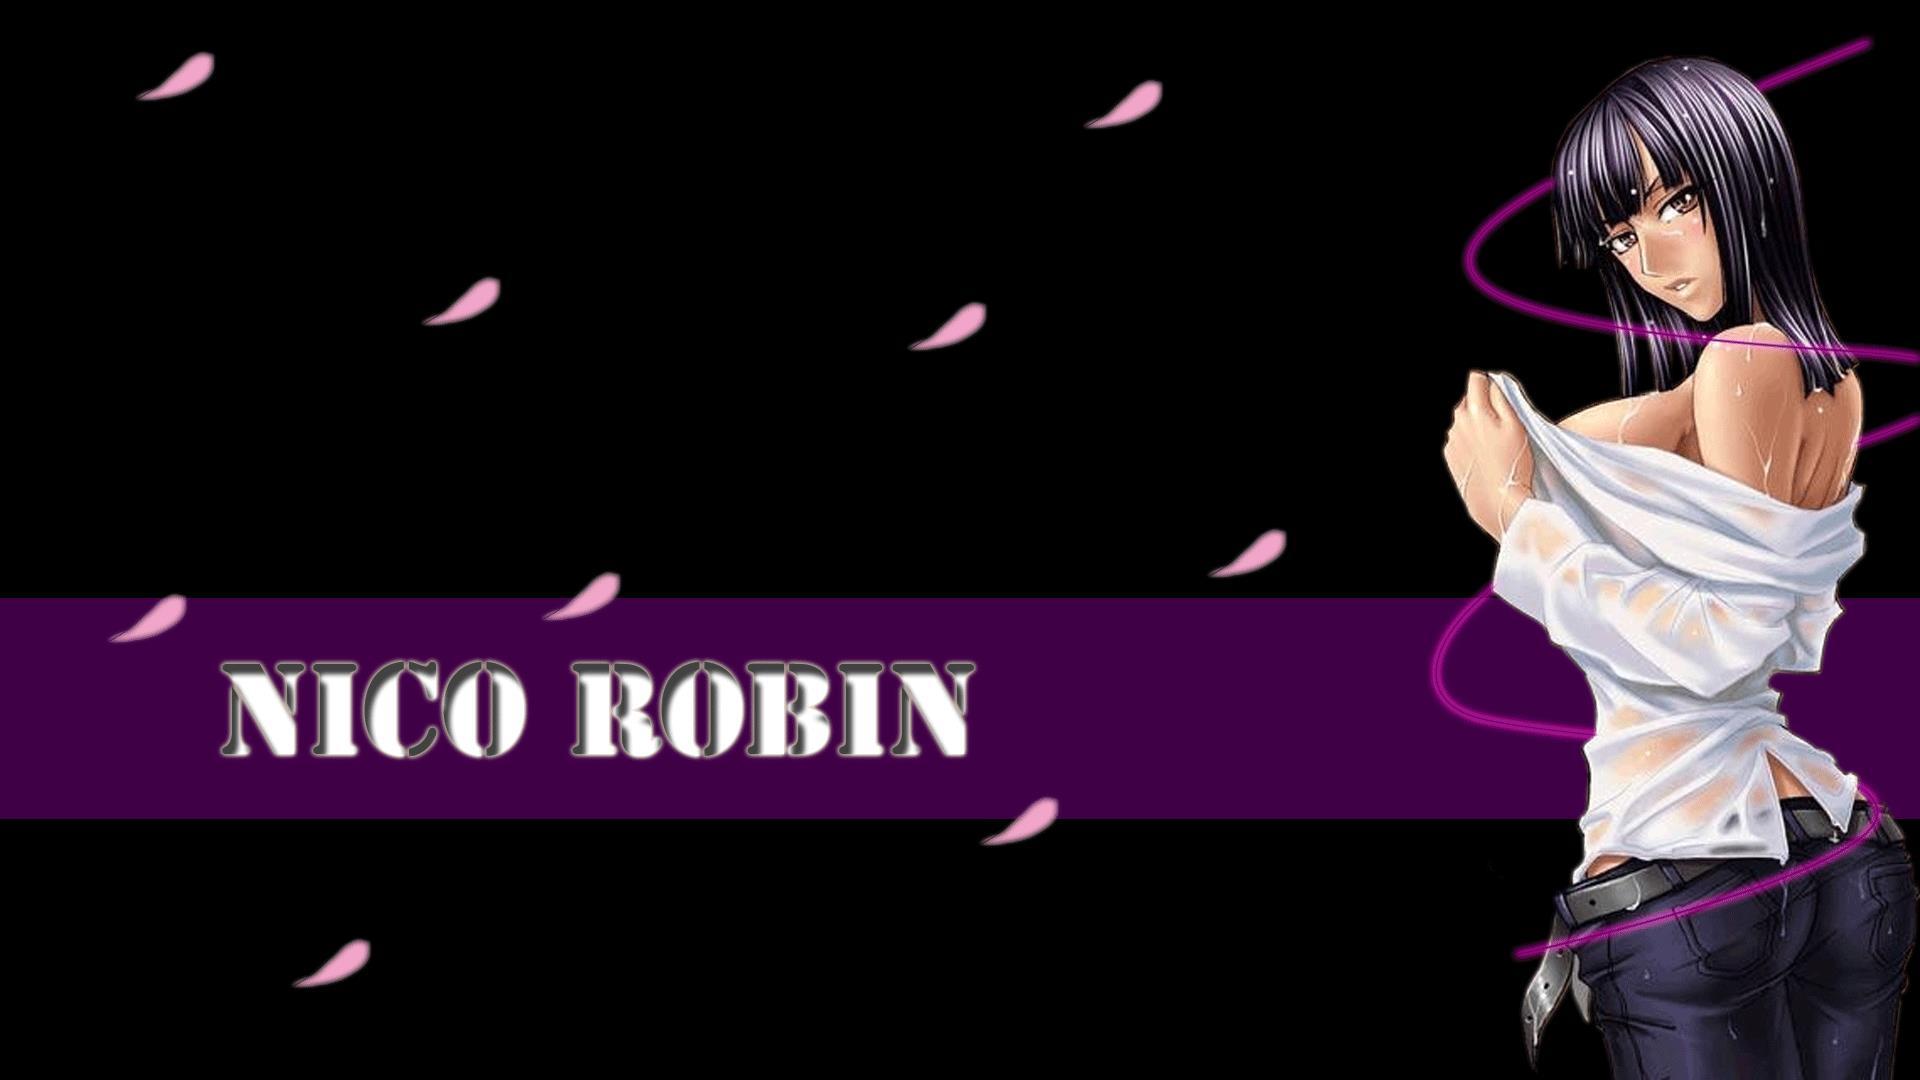 Nico Robin Hd Wallpaper 4k For Pc, Nico Robin, Anime